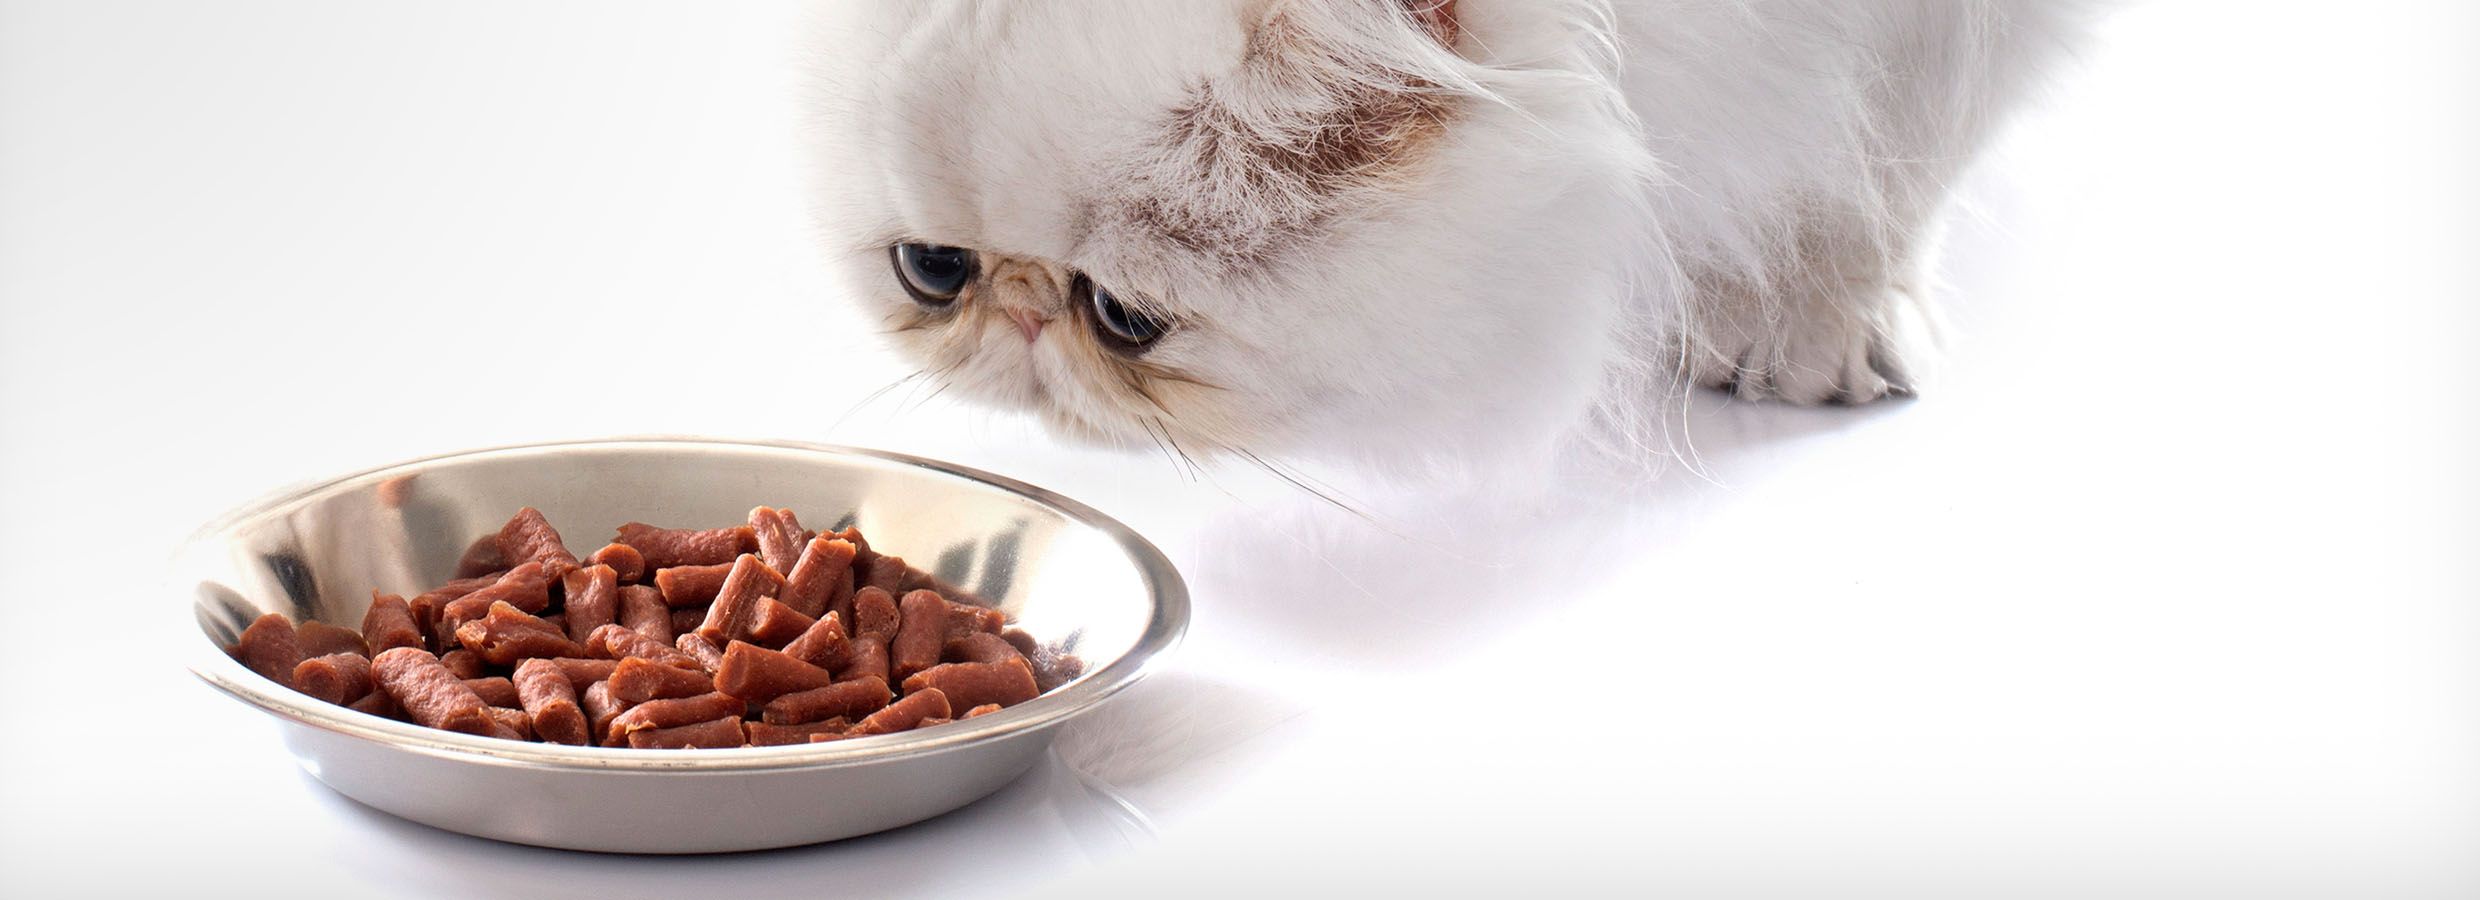 cat refuses to eat cat food